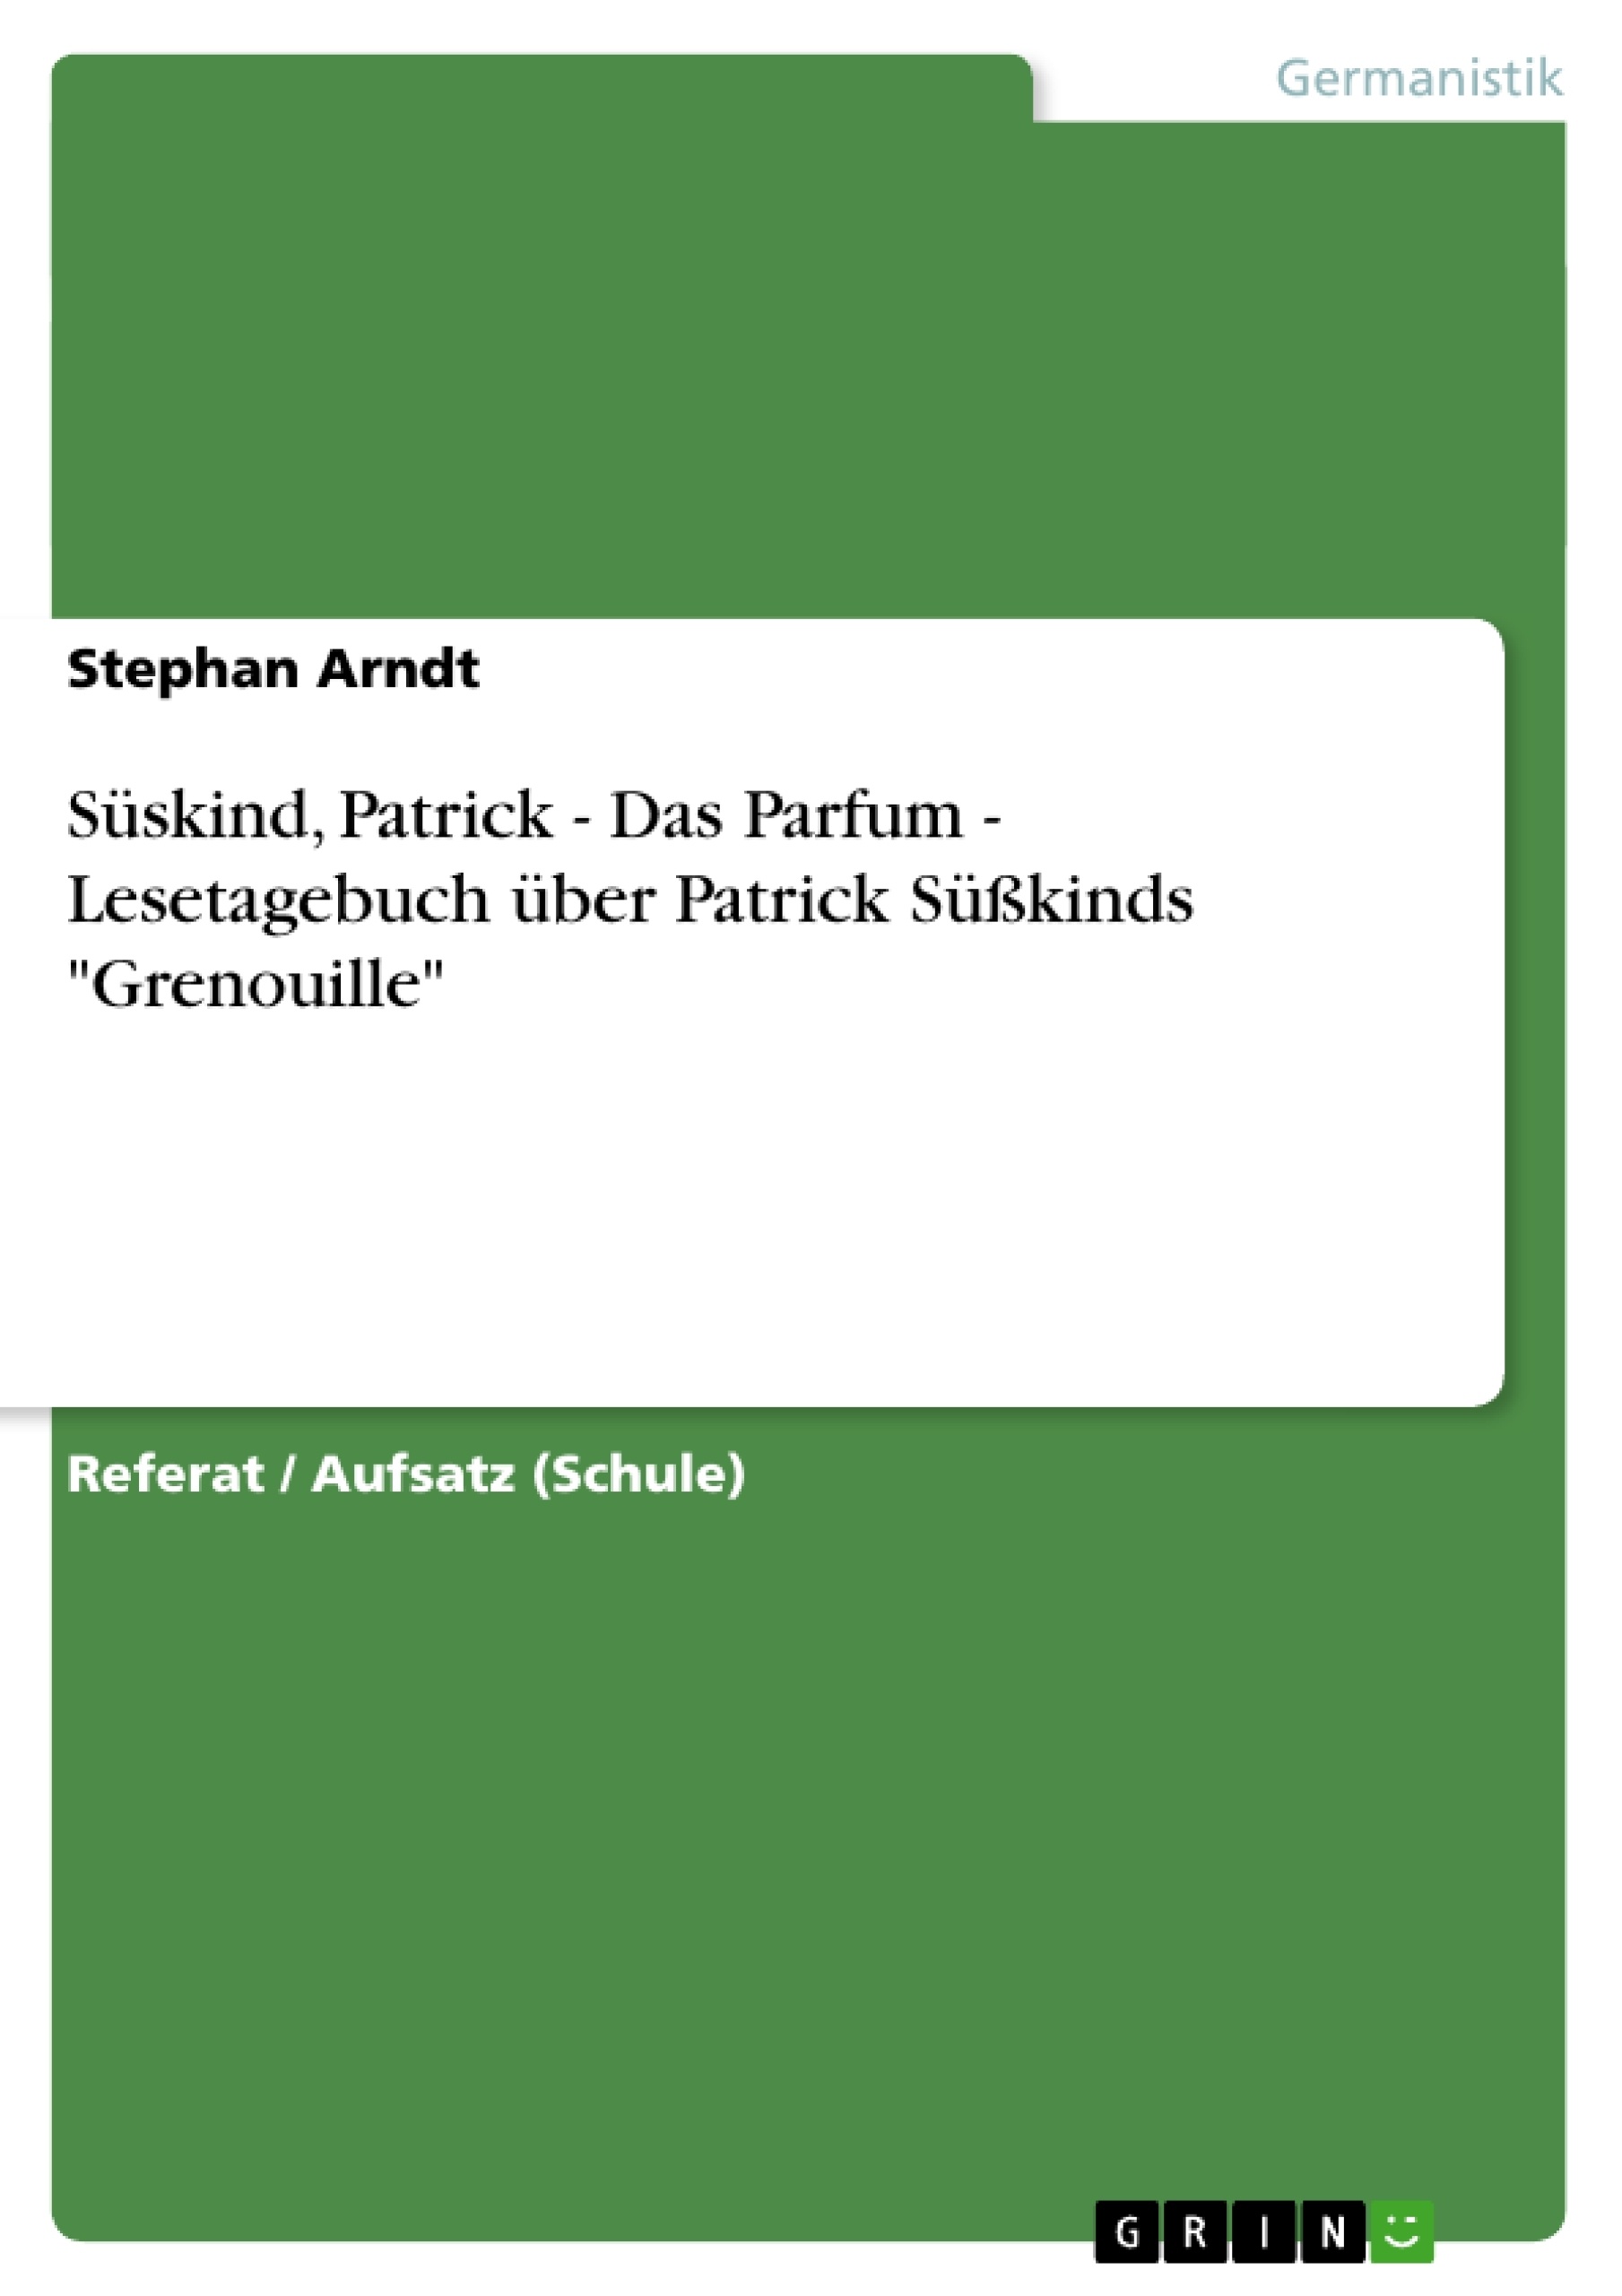 Titre: Süskind, Patrick - Das Parfum - Lesetagebuch über Patrick Süßkinds "Grenouille"